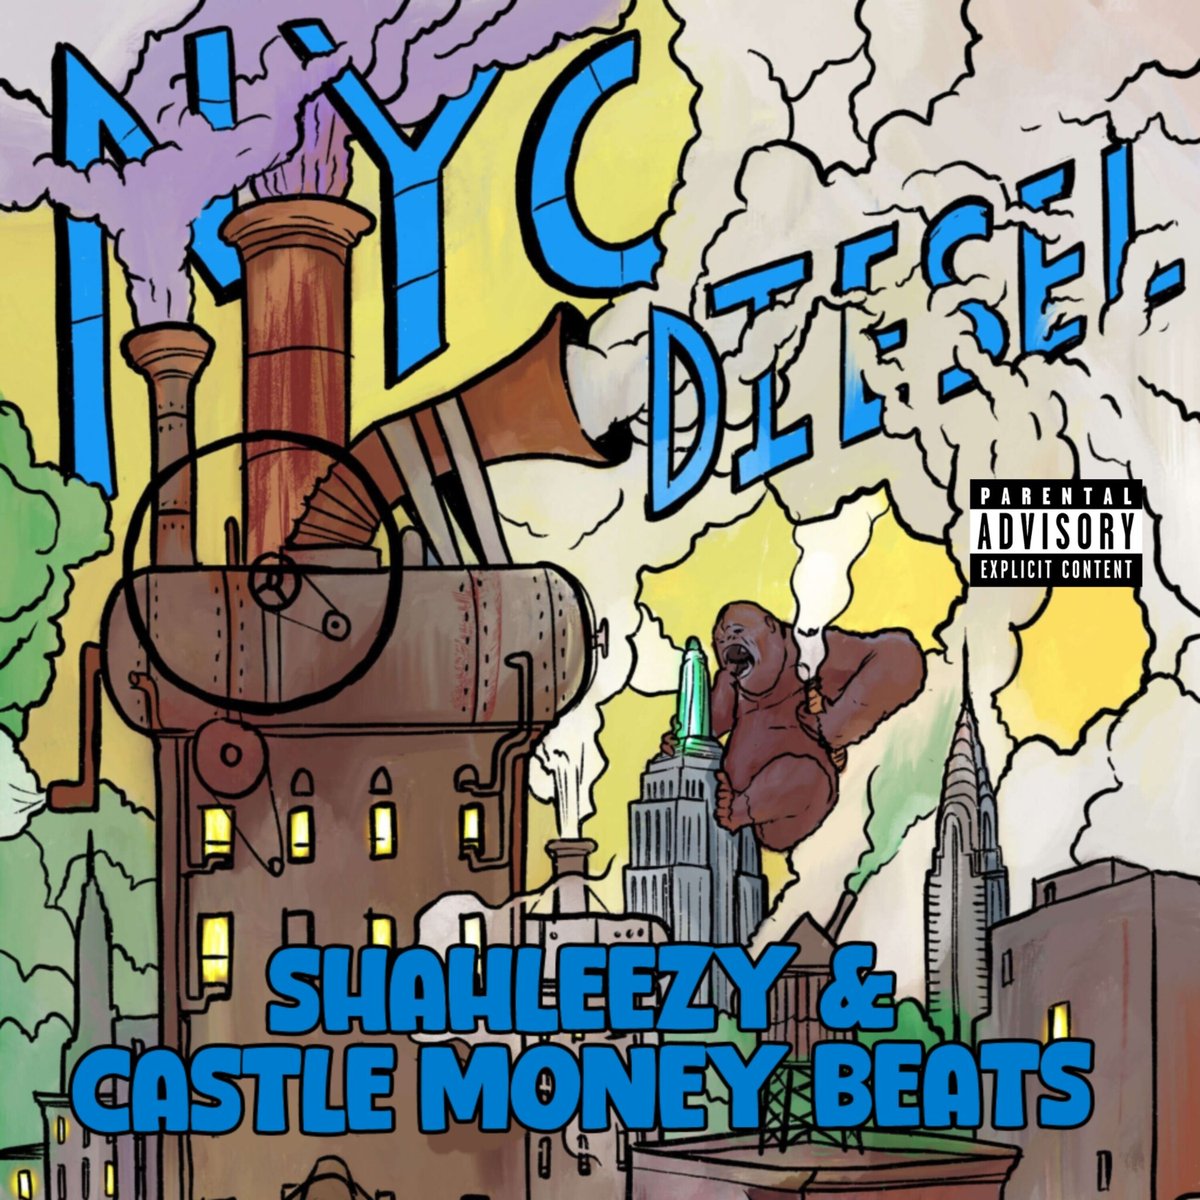 Now playing : @shahleezy ' NYC Diesel ' @CastleMoneyBea1 in rotation on @1009WXIR @sftu585radio mixcloud.com/christopher-gr…